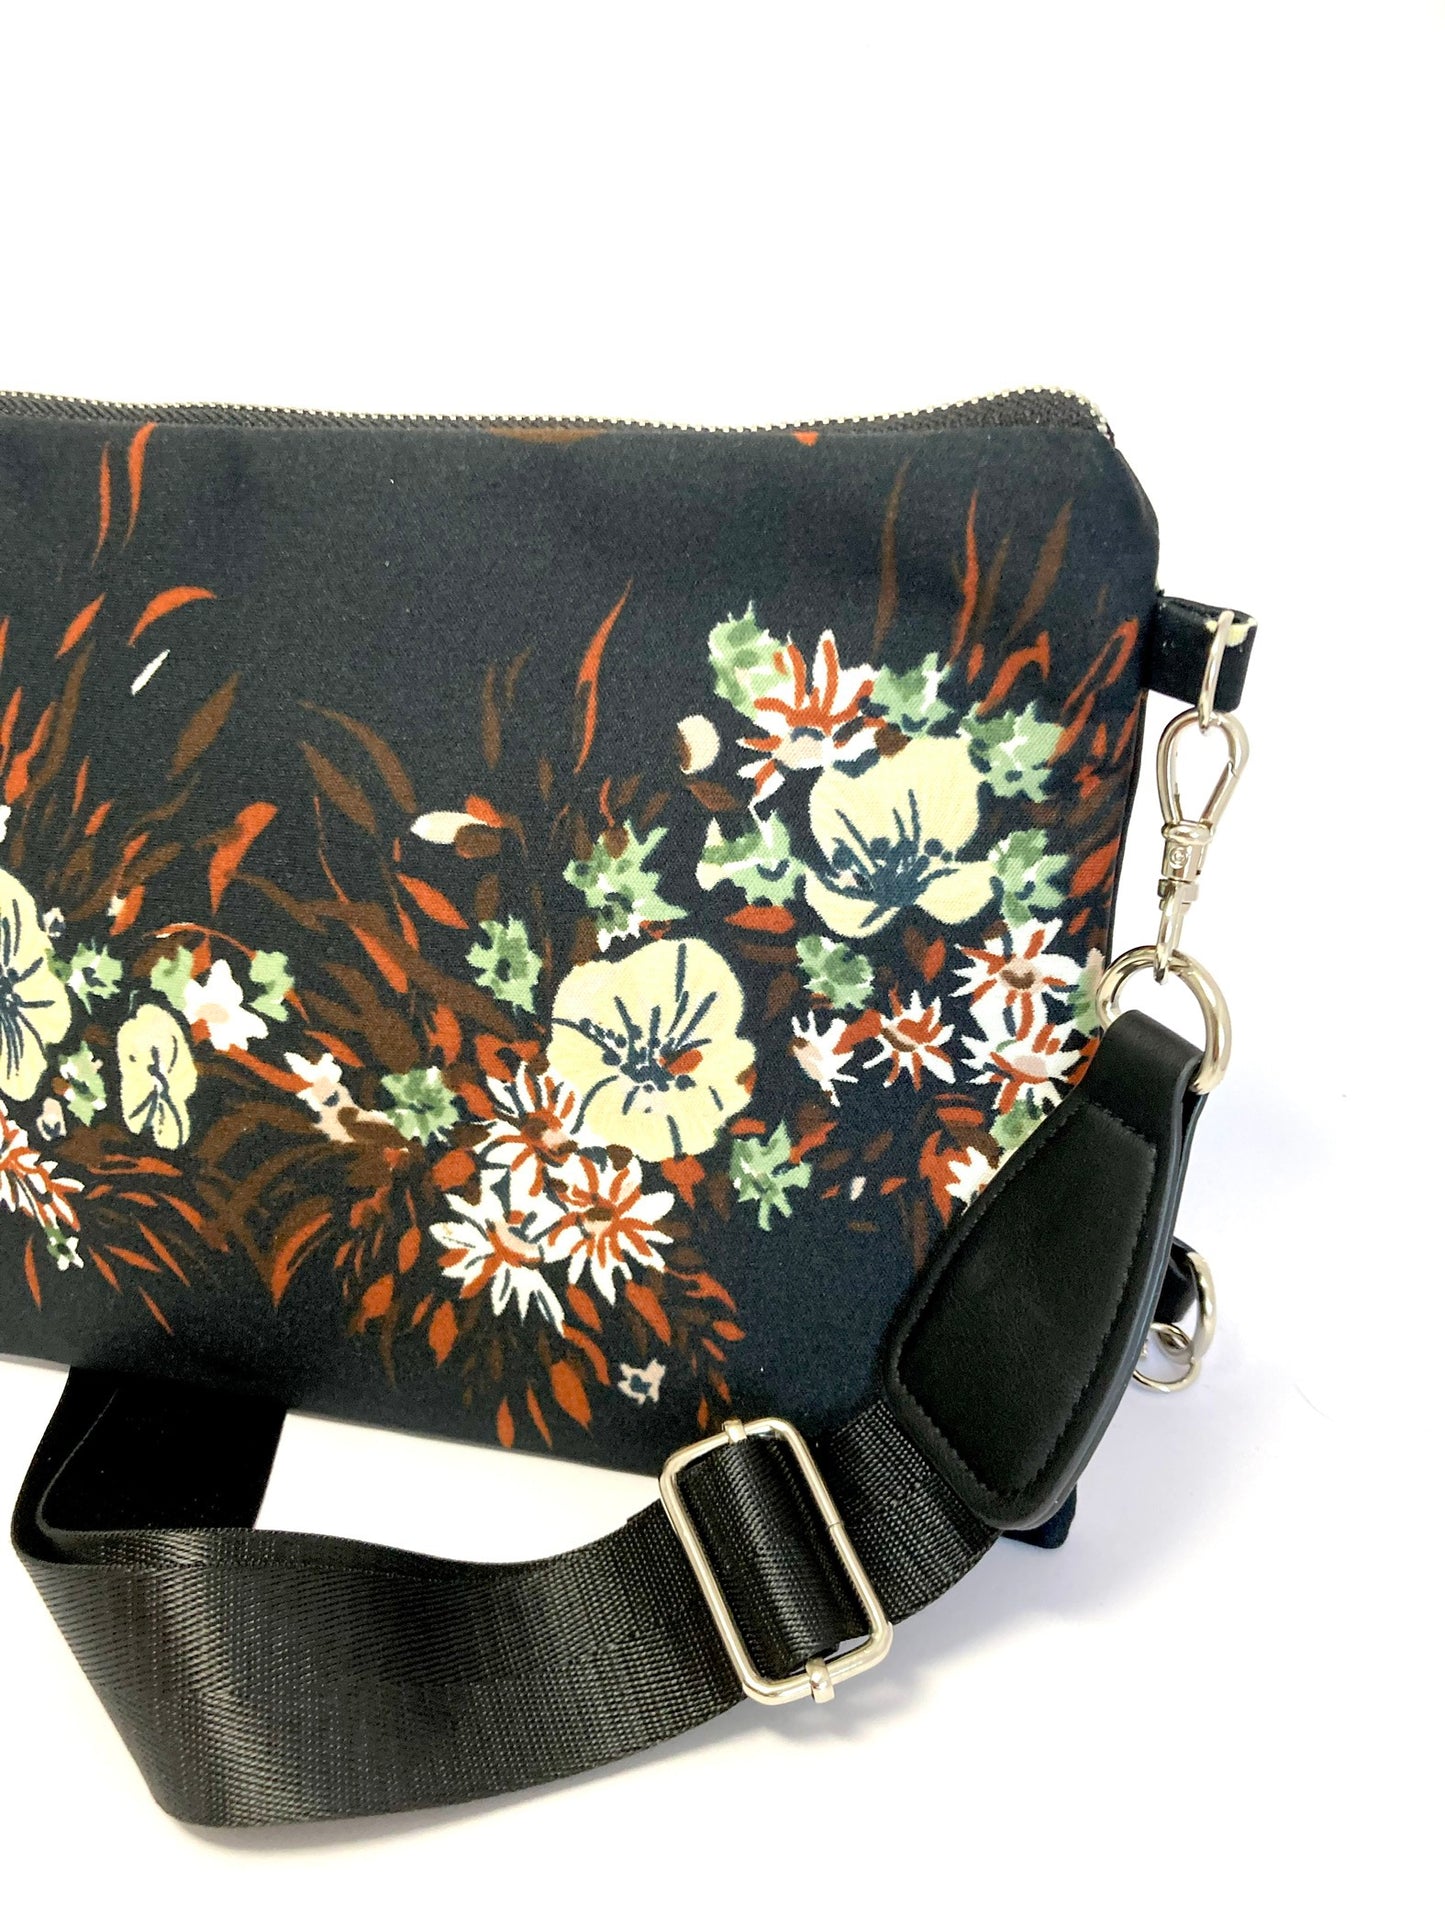 Floral zipper bag with tassel